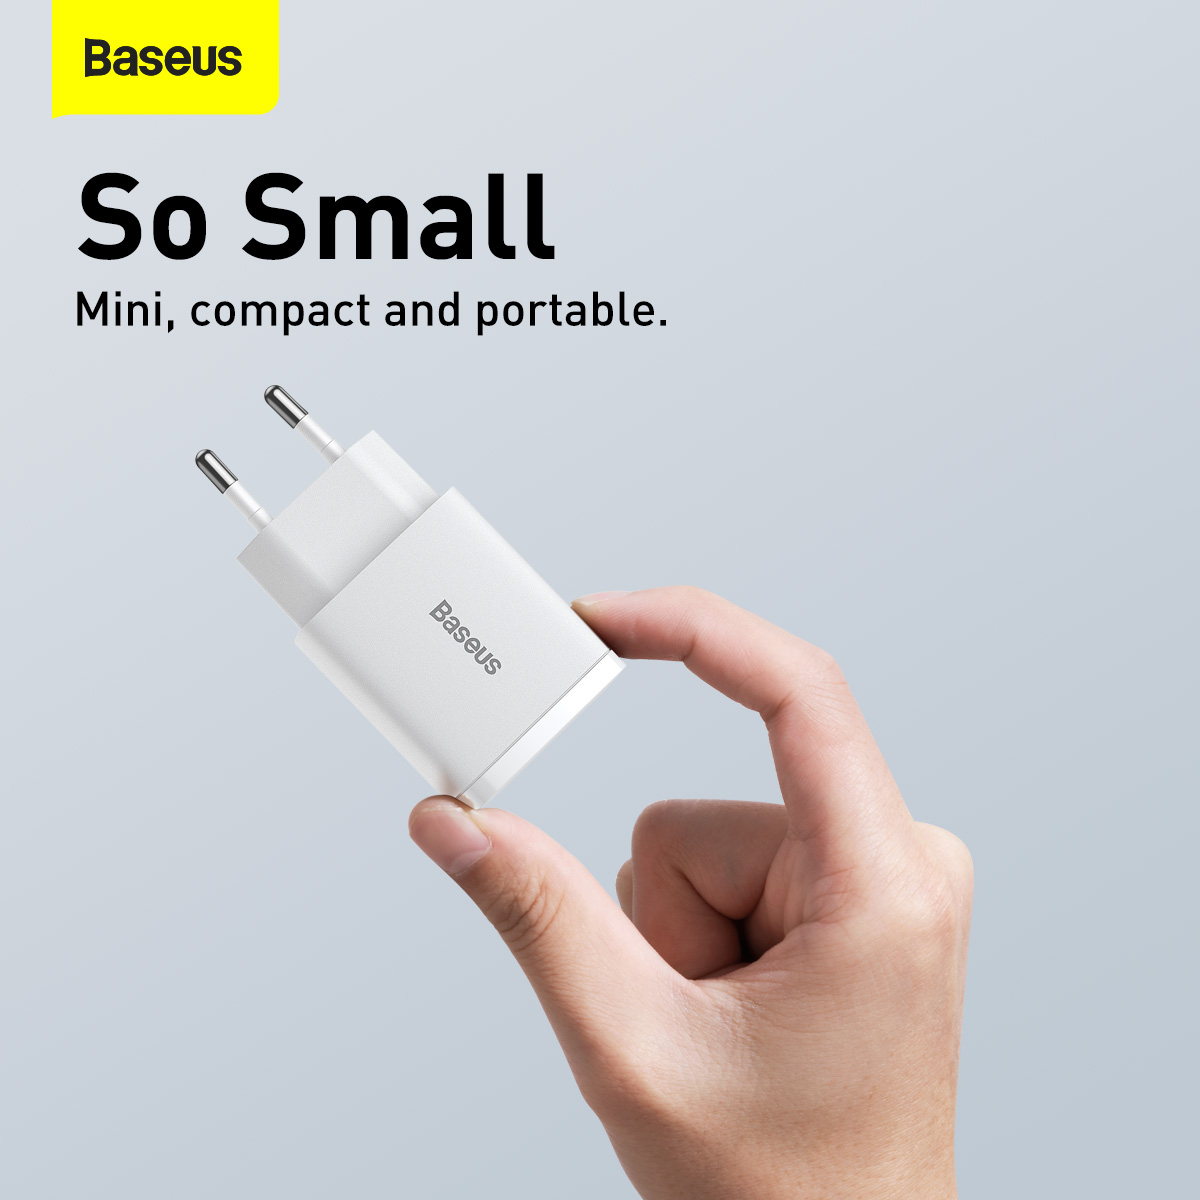 Baseus CCXJ-B02 Compact Väggladdare USB+USB-C, 20W, EU, vit